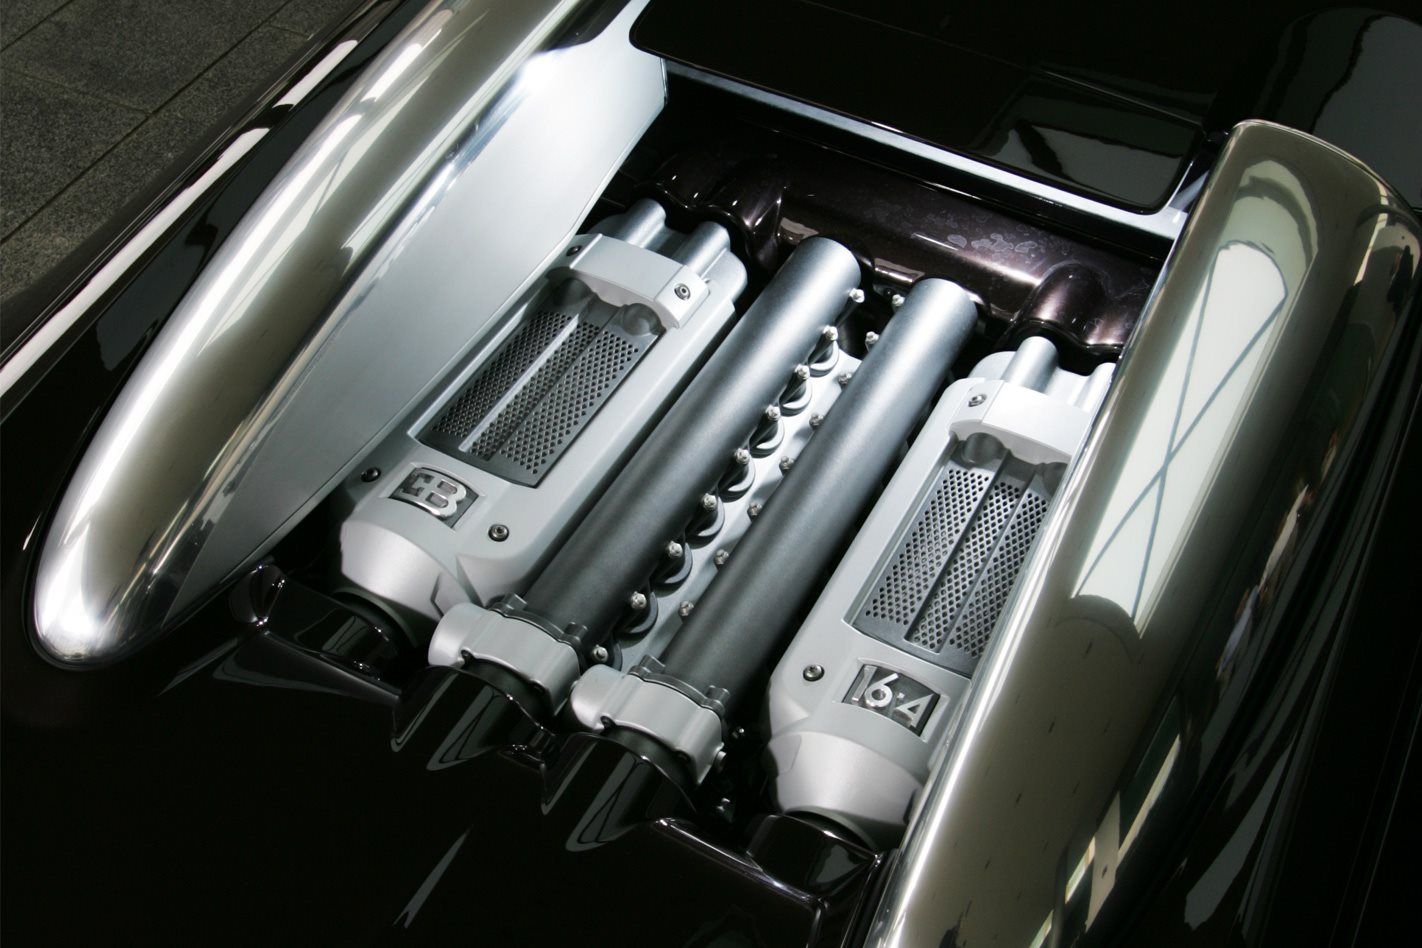 The Veyron had a massive W16 quad turbo engine